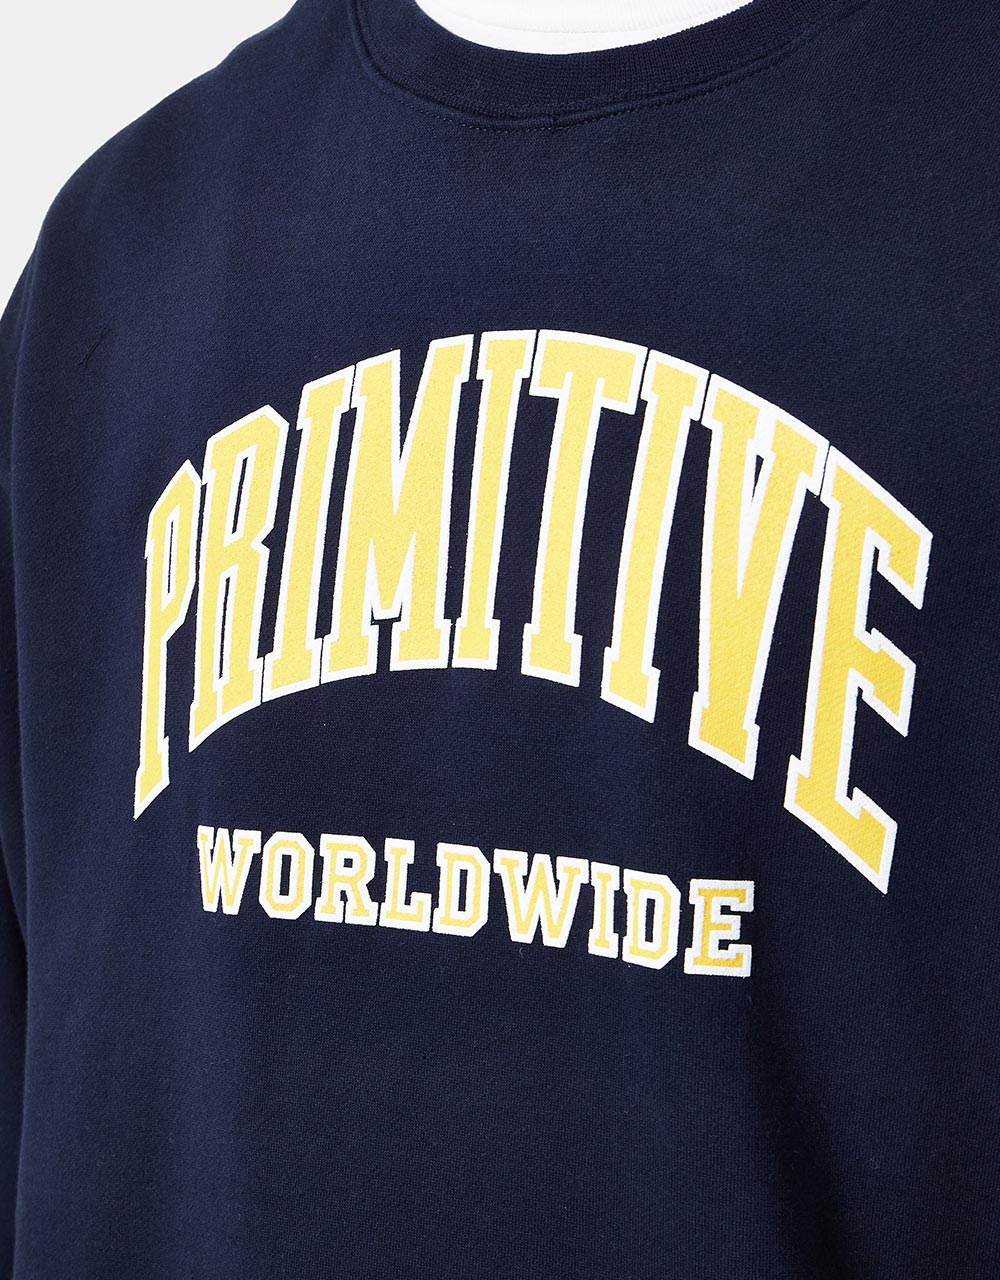 Primitive Collegiate Worldwide Crewneck - Navy